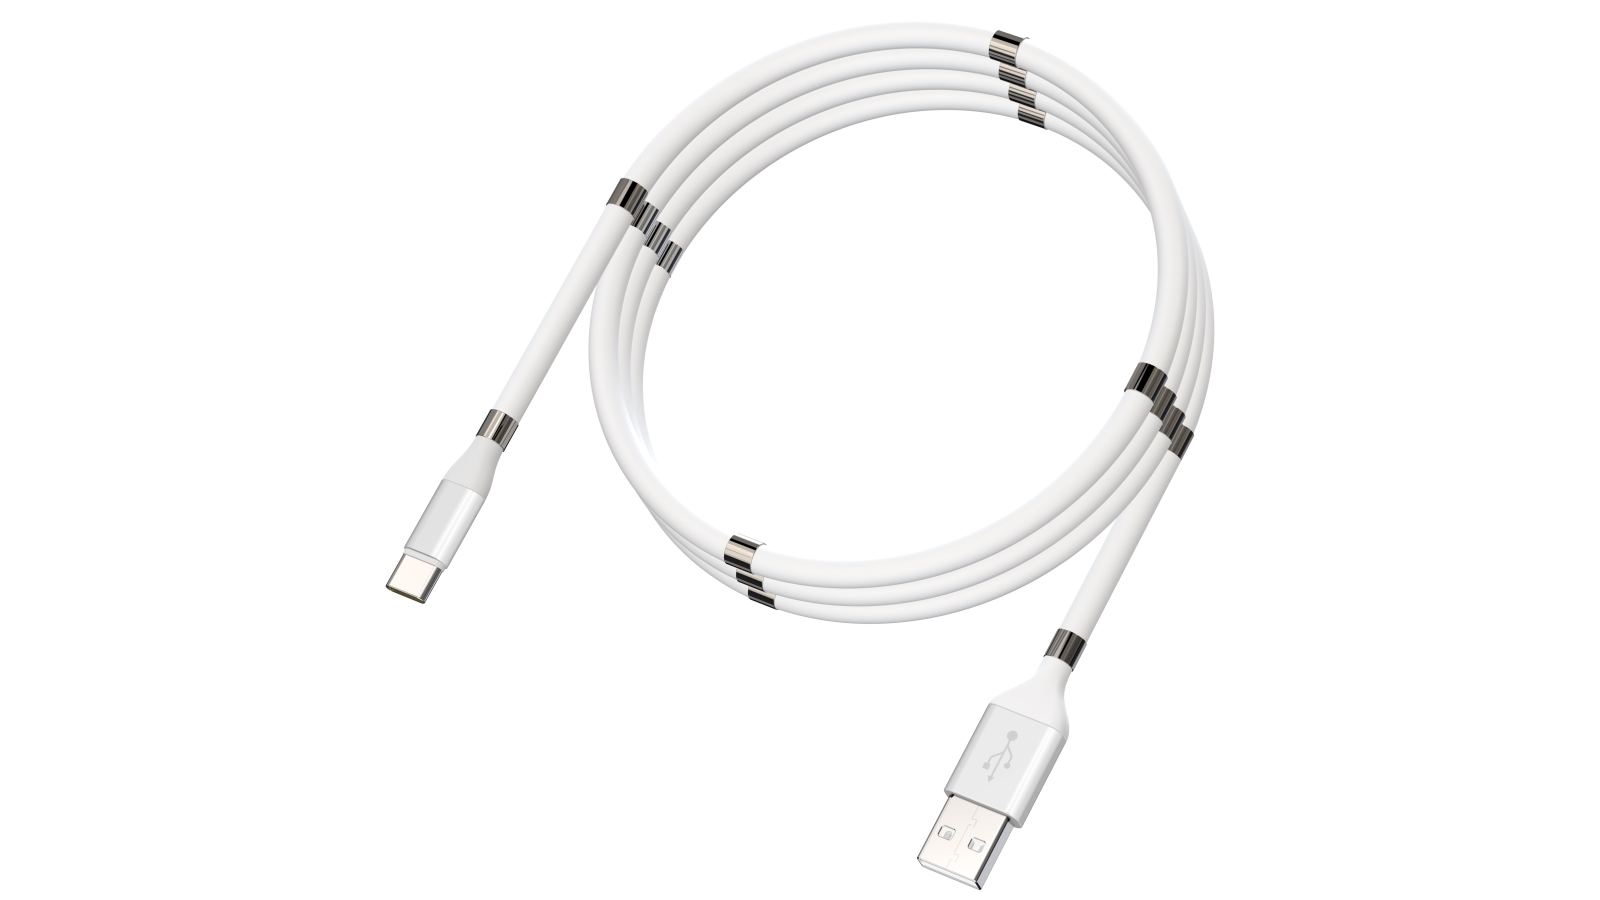 Adaptador USB 2.0 a Rj45 / 2x Mirco Usb Cable Lan Ethernet Adapter para   Fire Tv 3 o Stick Gen 2